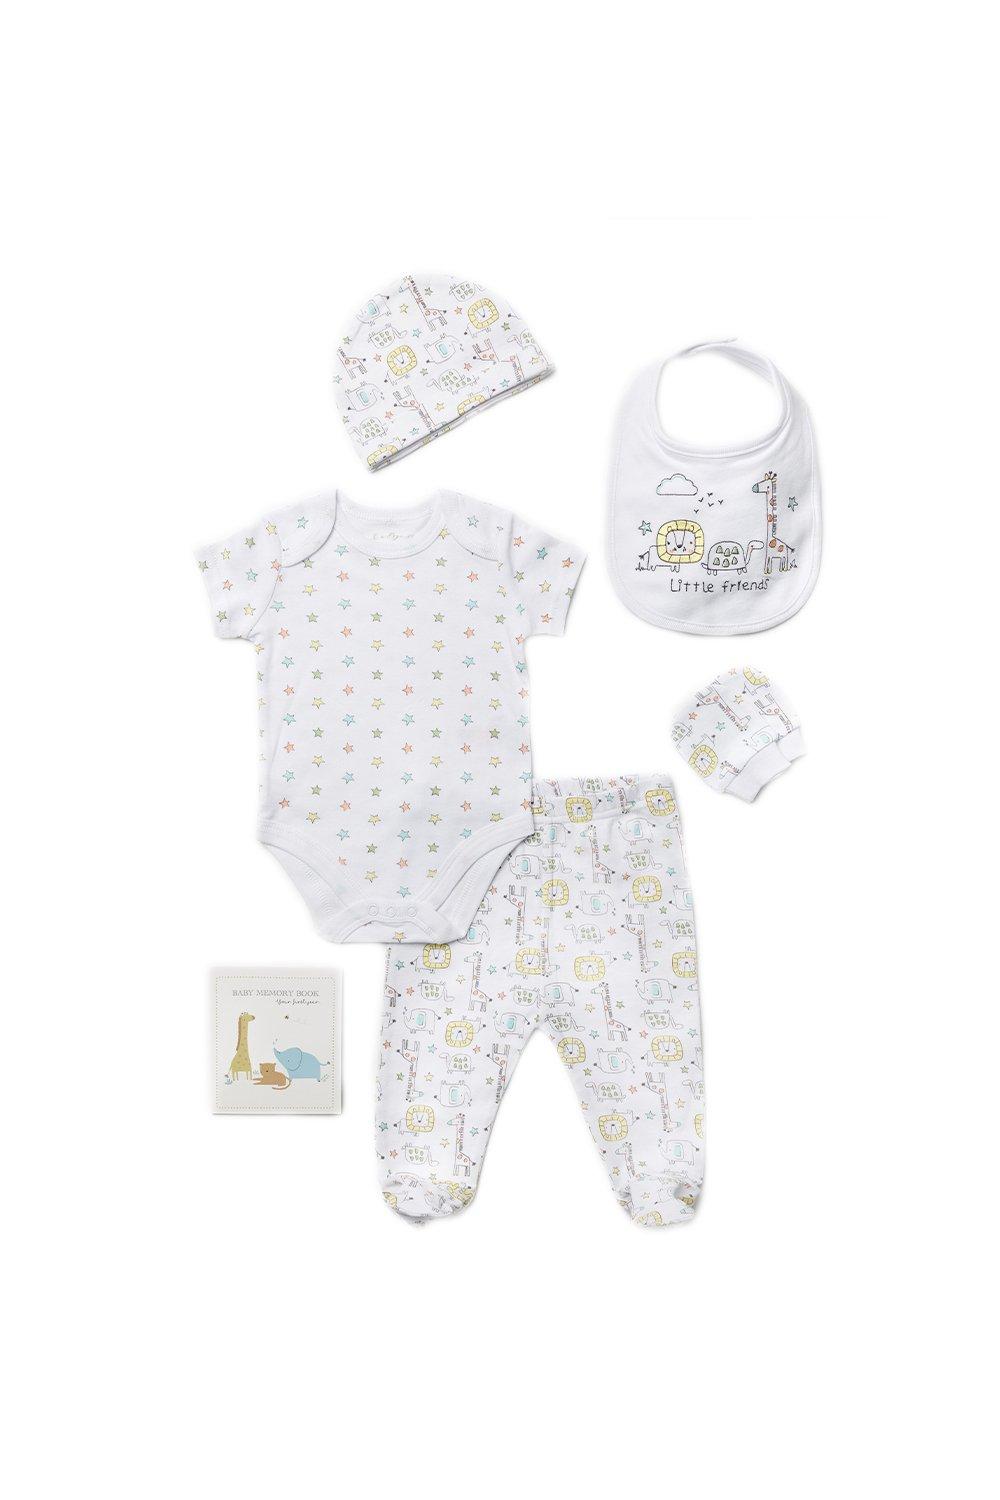 Animal Print Cotton 6-Piece Baby Gift Set